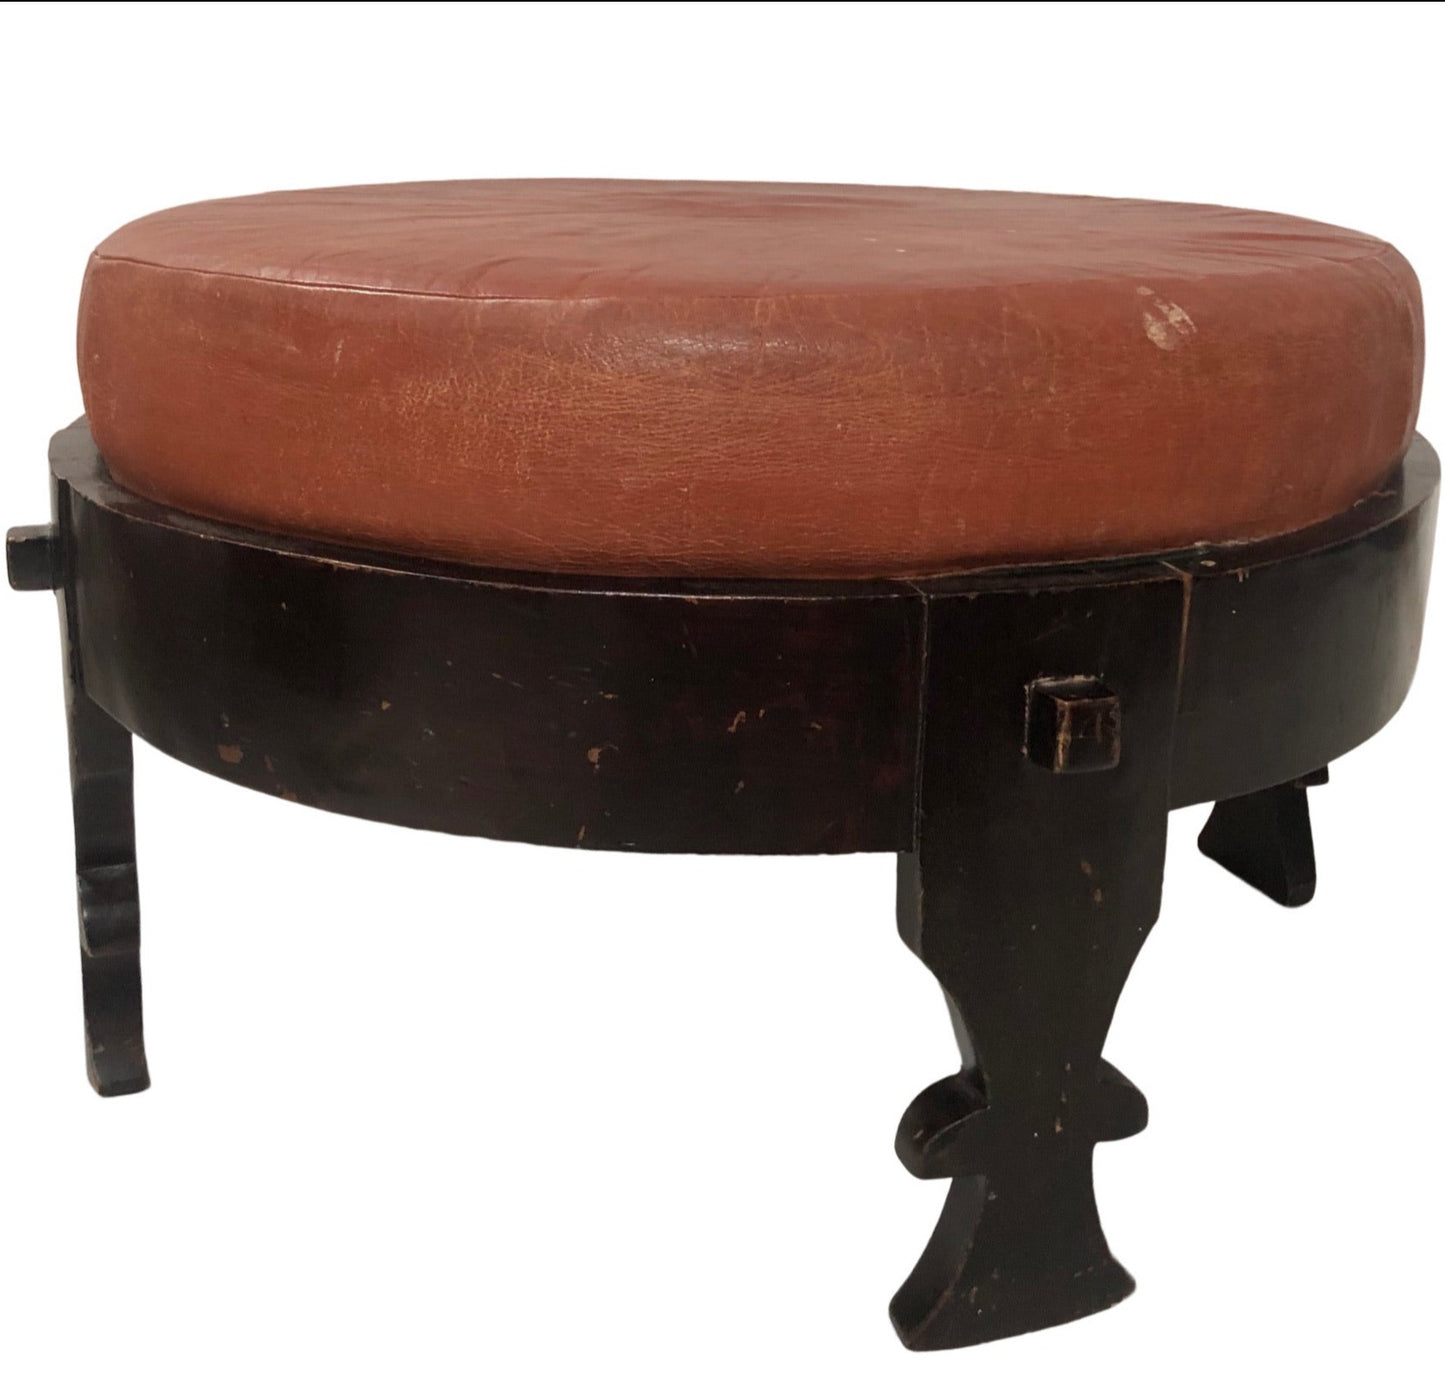 Vintage Round Leather Ottoman